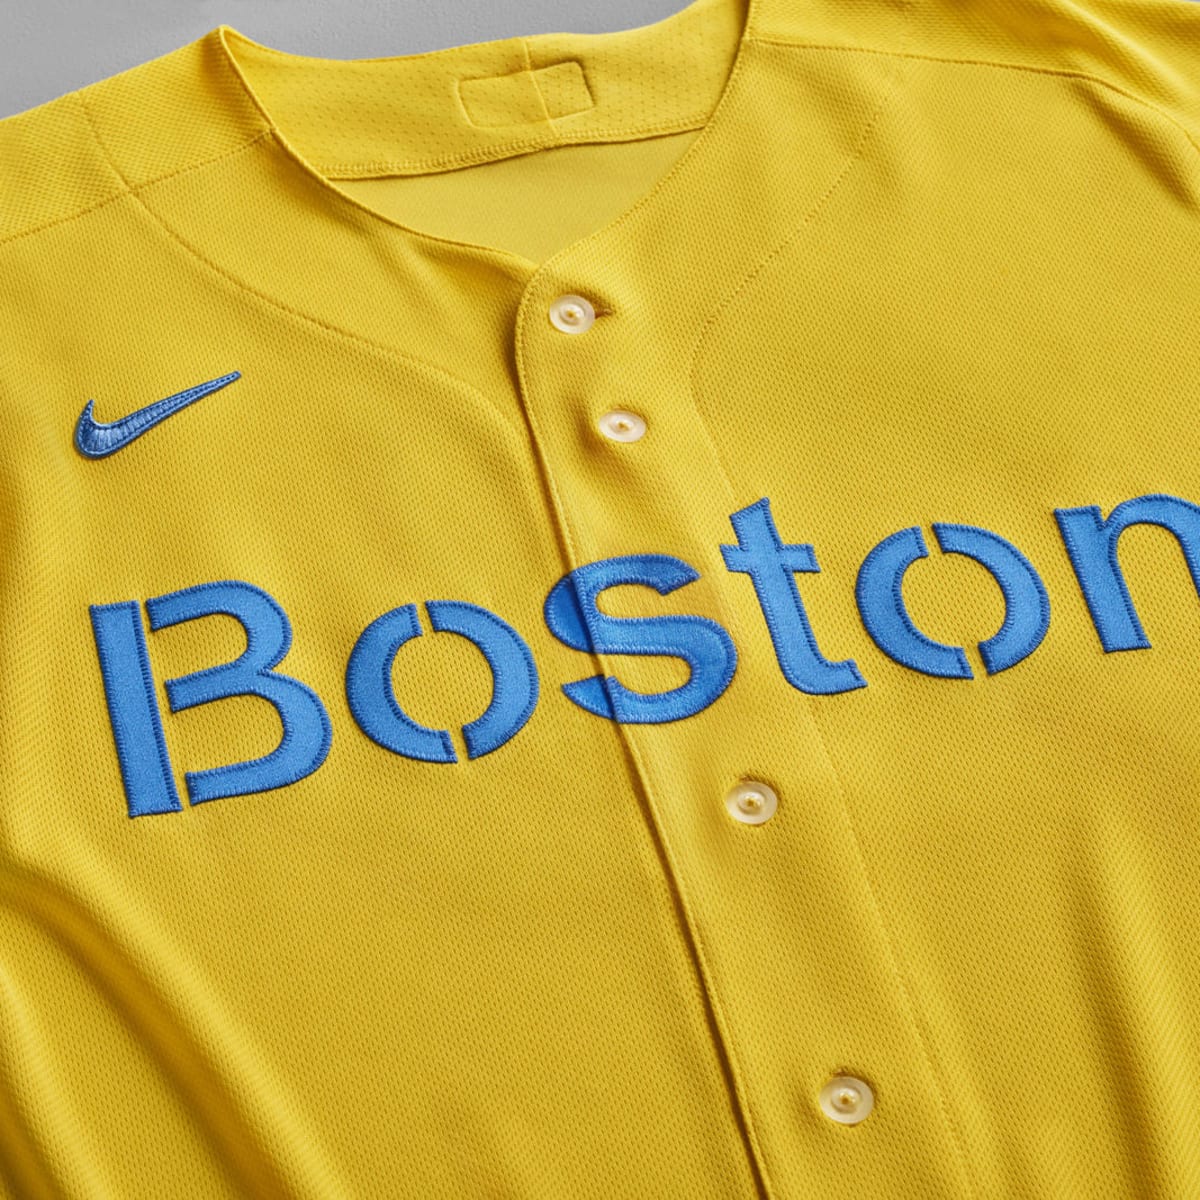 boston city connect jersey